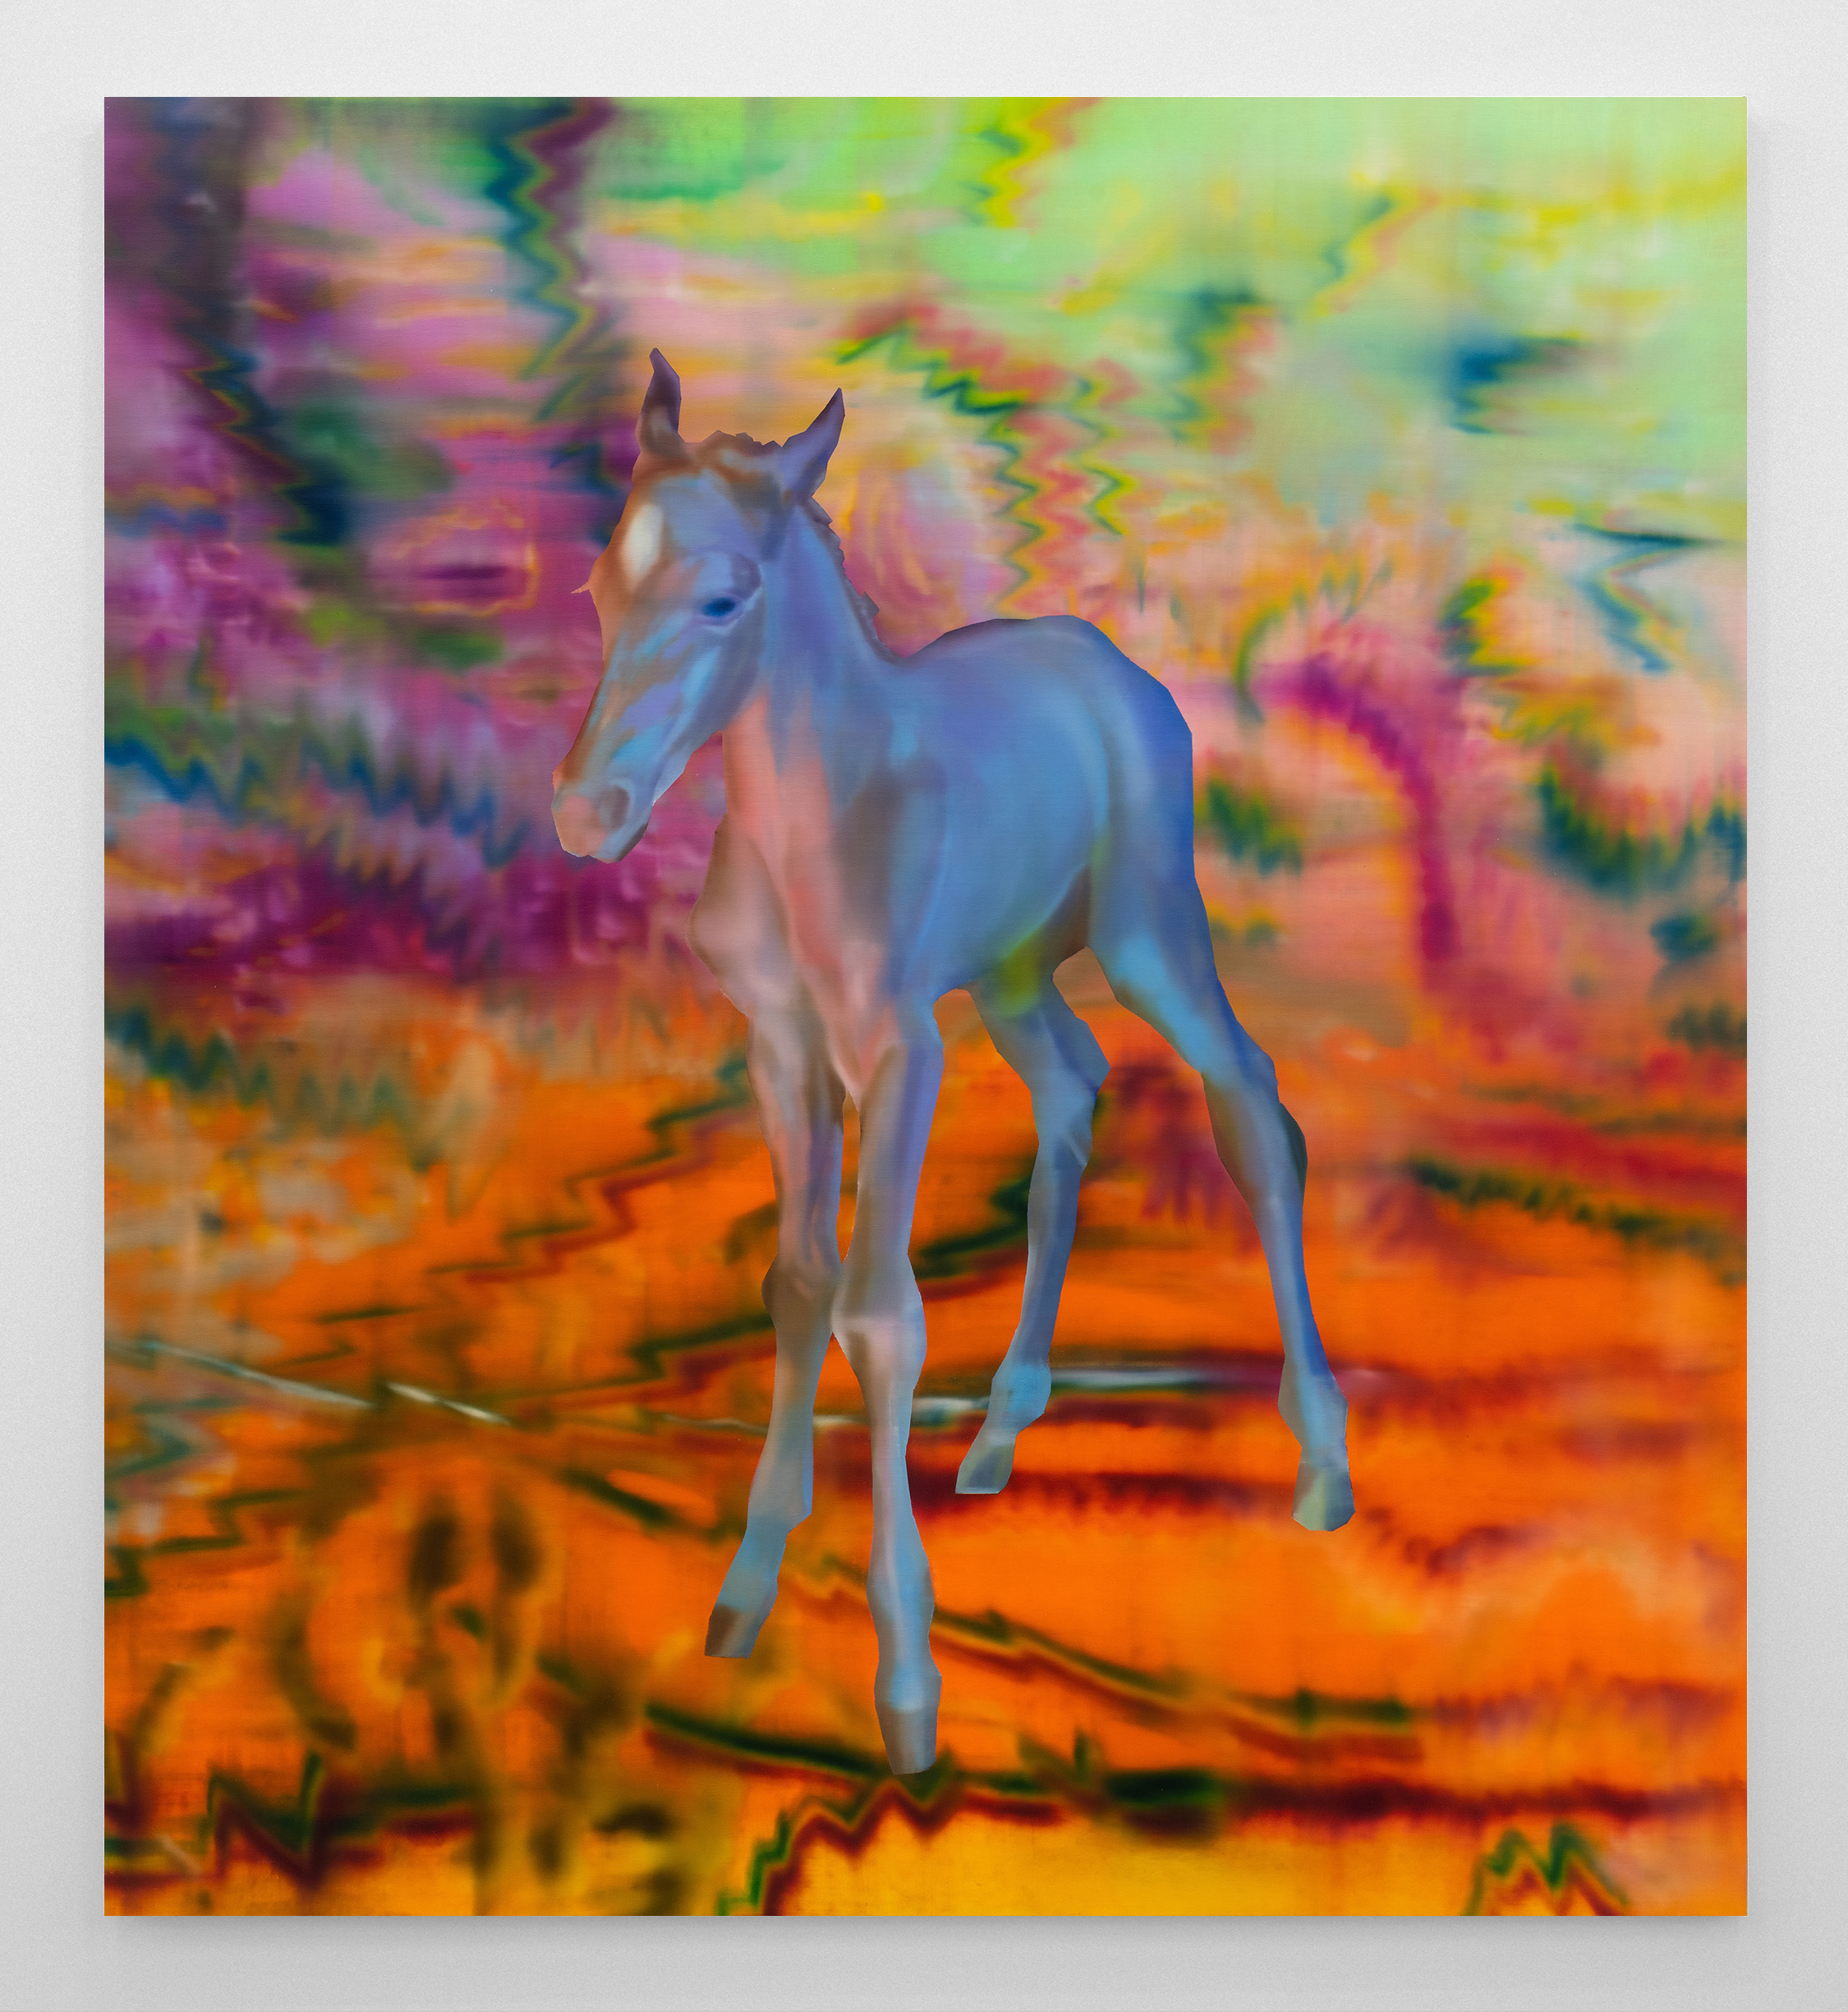 Rute Merk, Cremello, 2020, oil on canvas, 205 x 185 cm, 80 3/4 x 72 7/8 in.